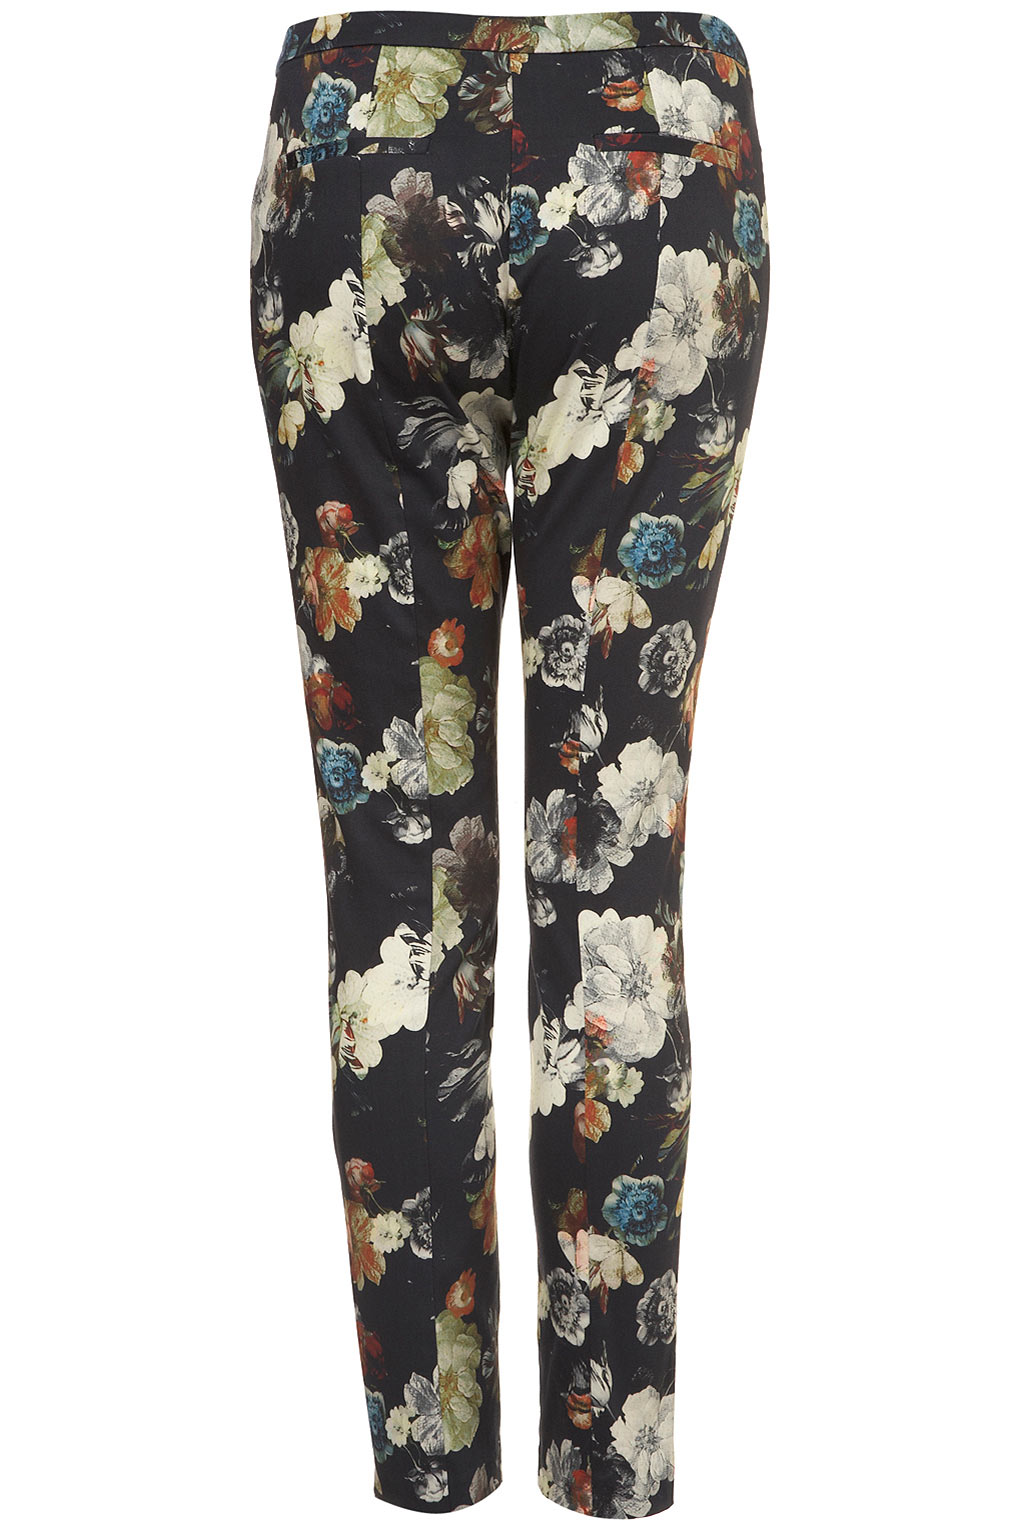 Lyst - Topshop Painted Flower Skinny Trousers